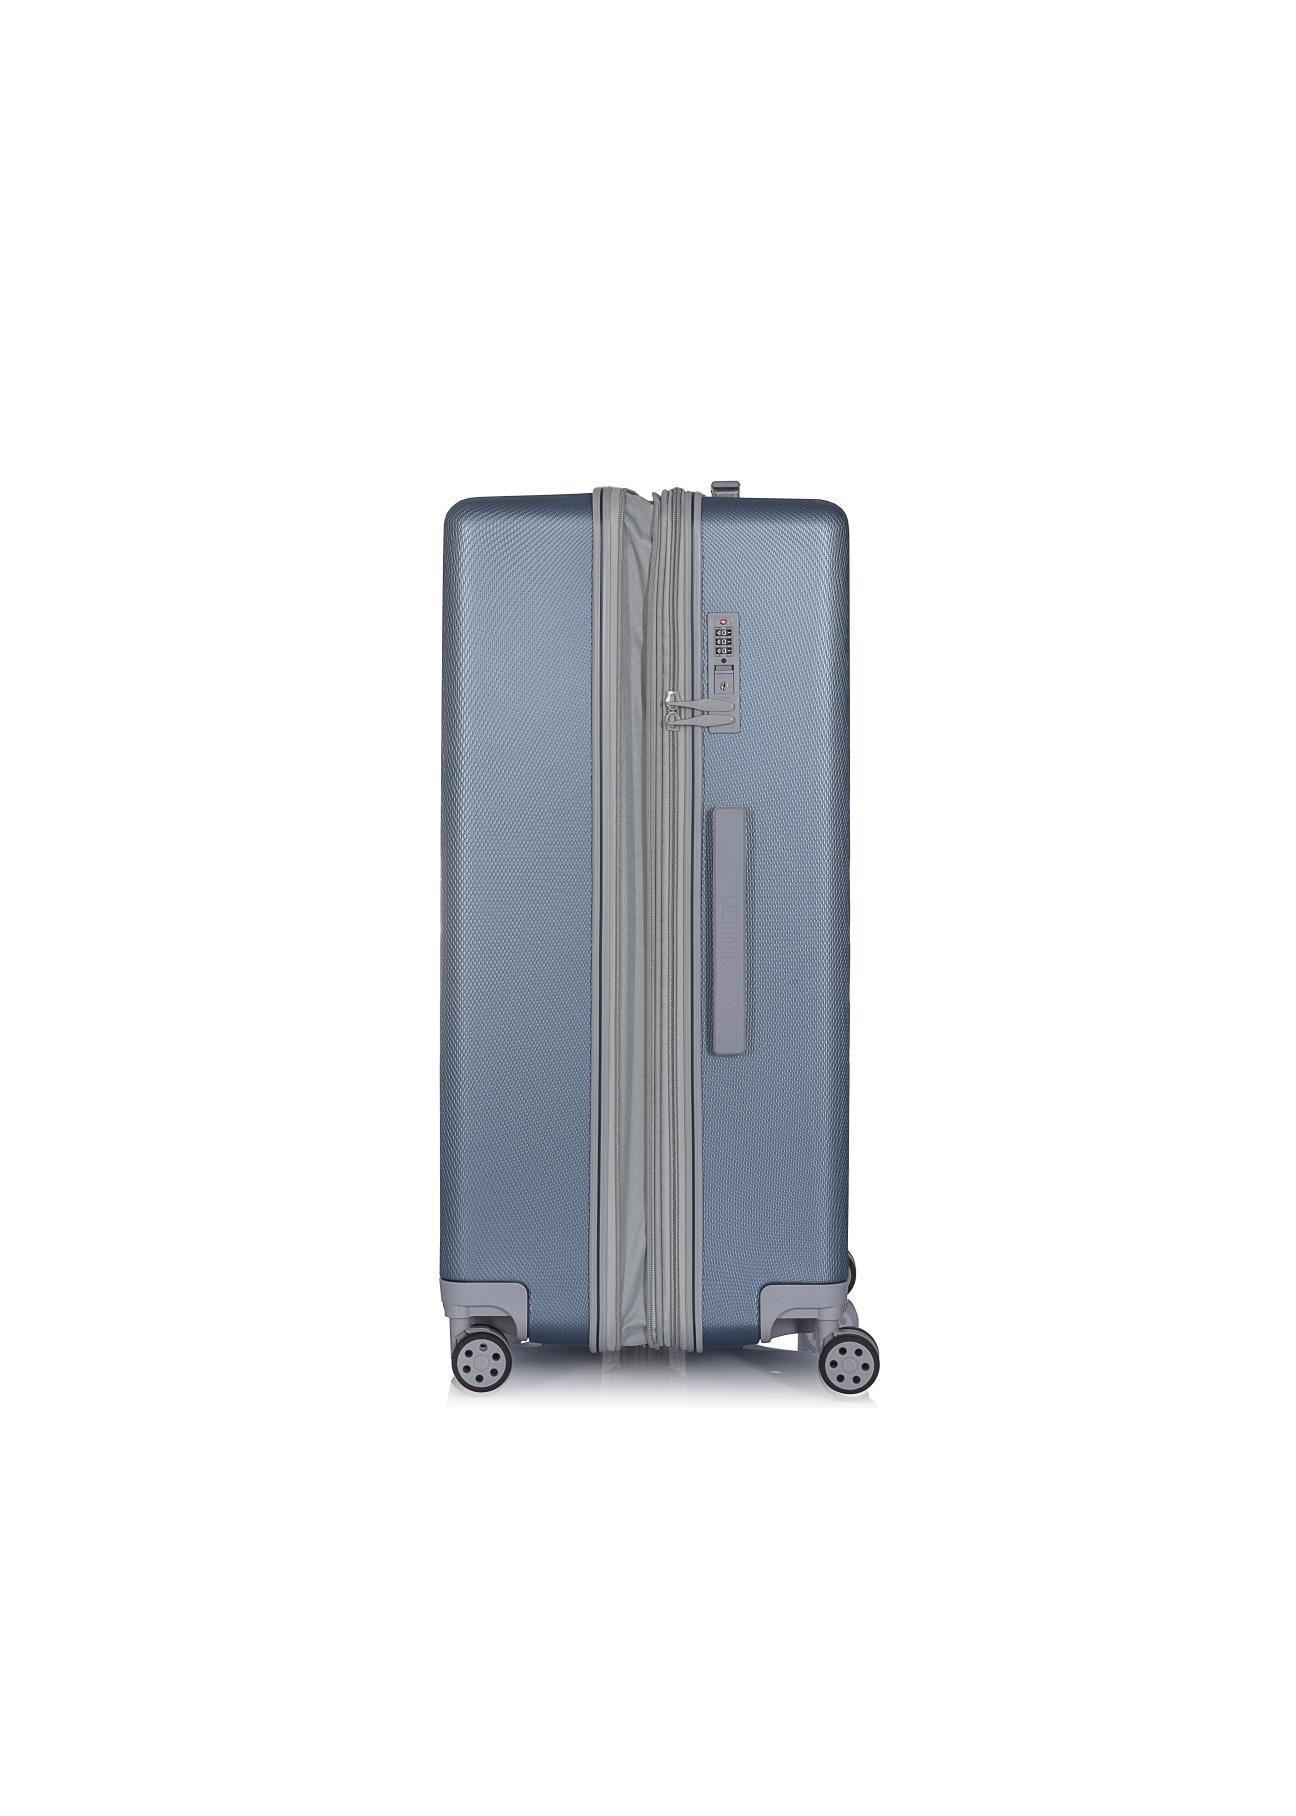 Duża walizka na kółkach WALAB-0026-61-28